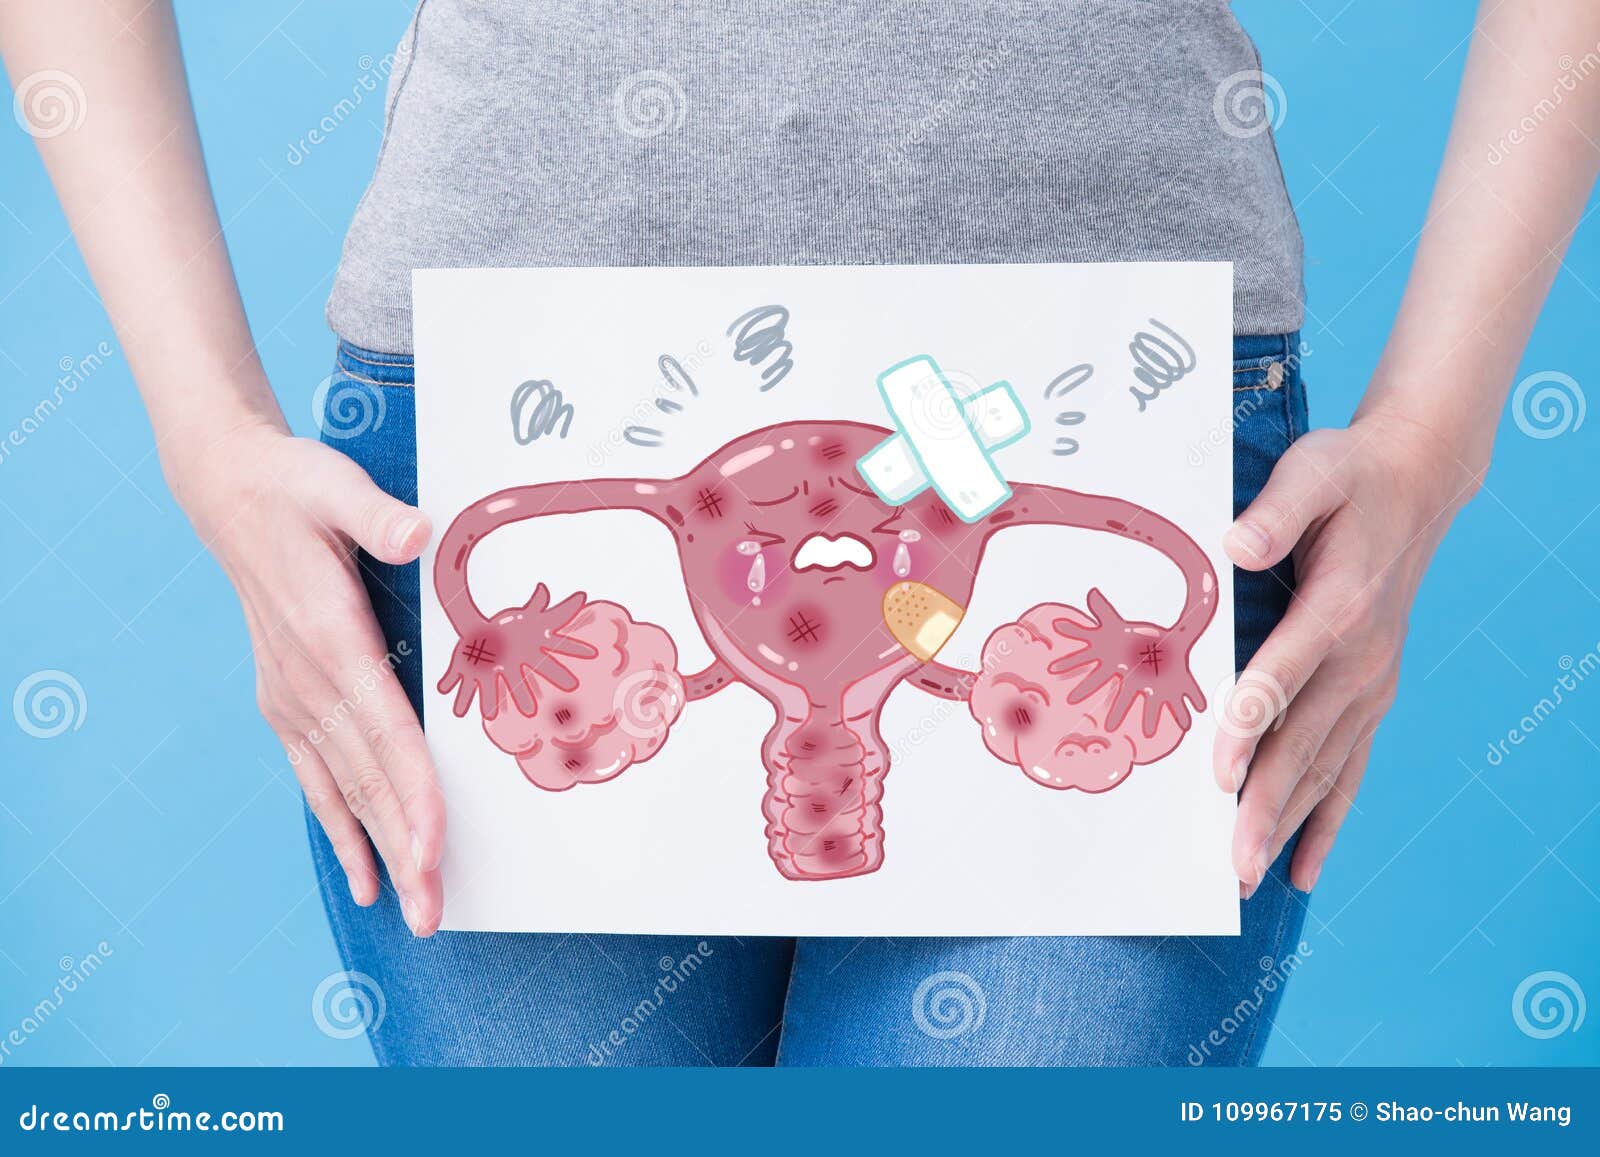 woman with unhealth uterus